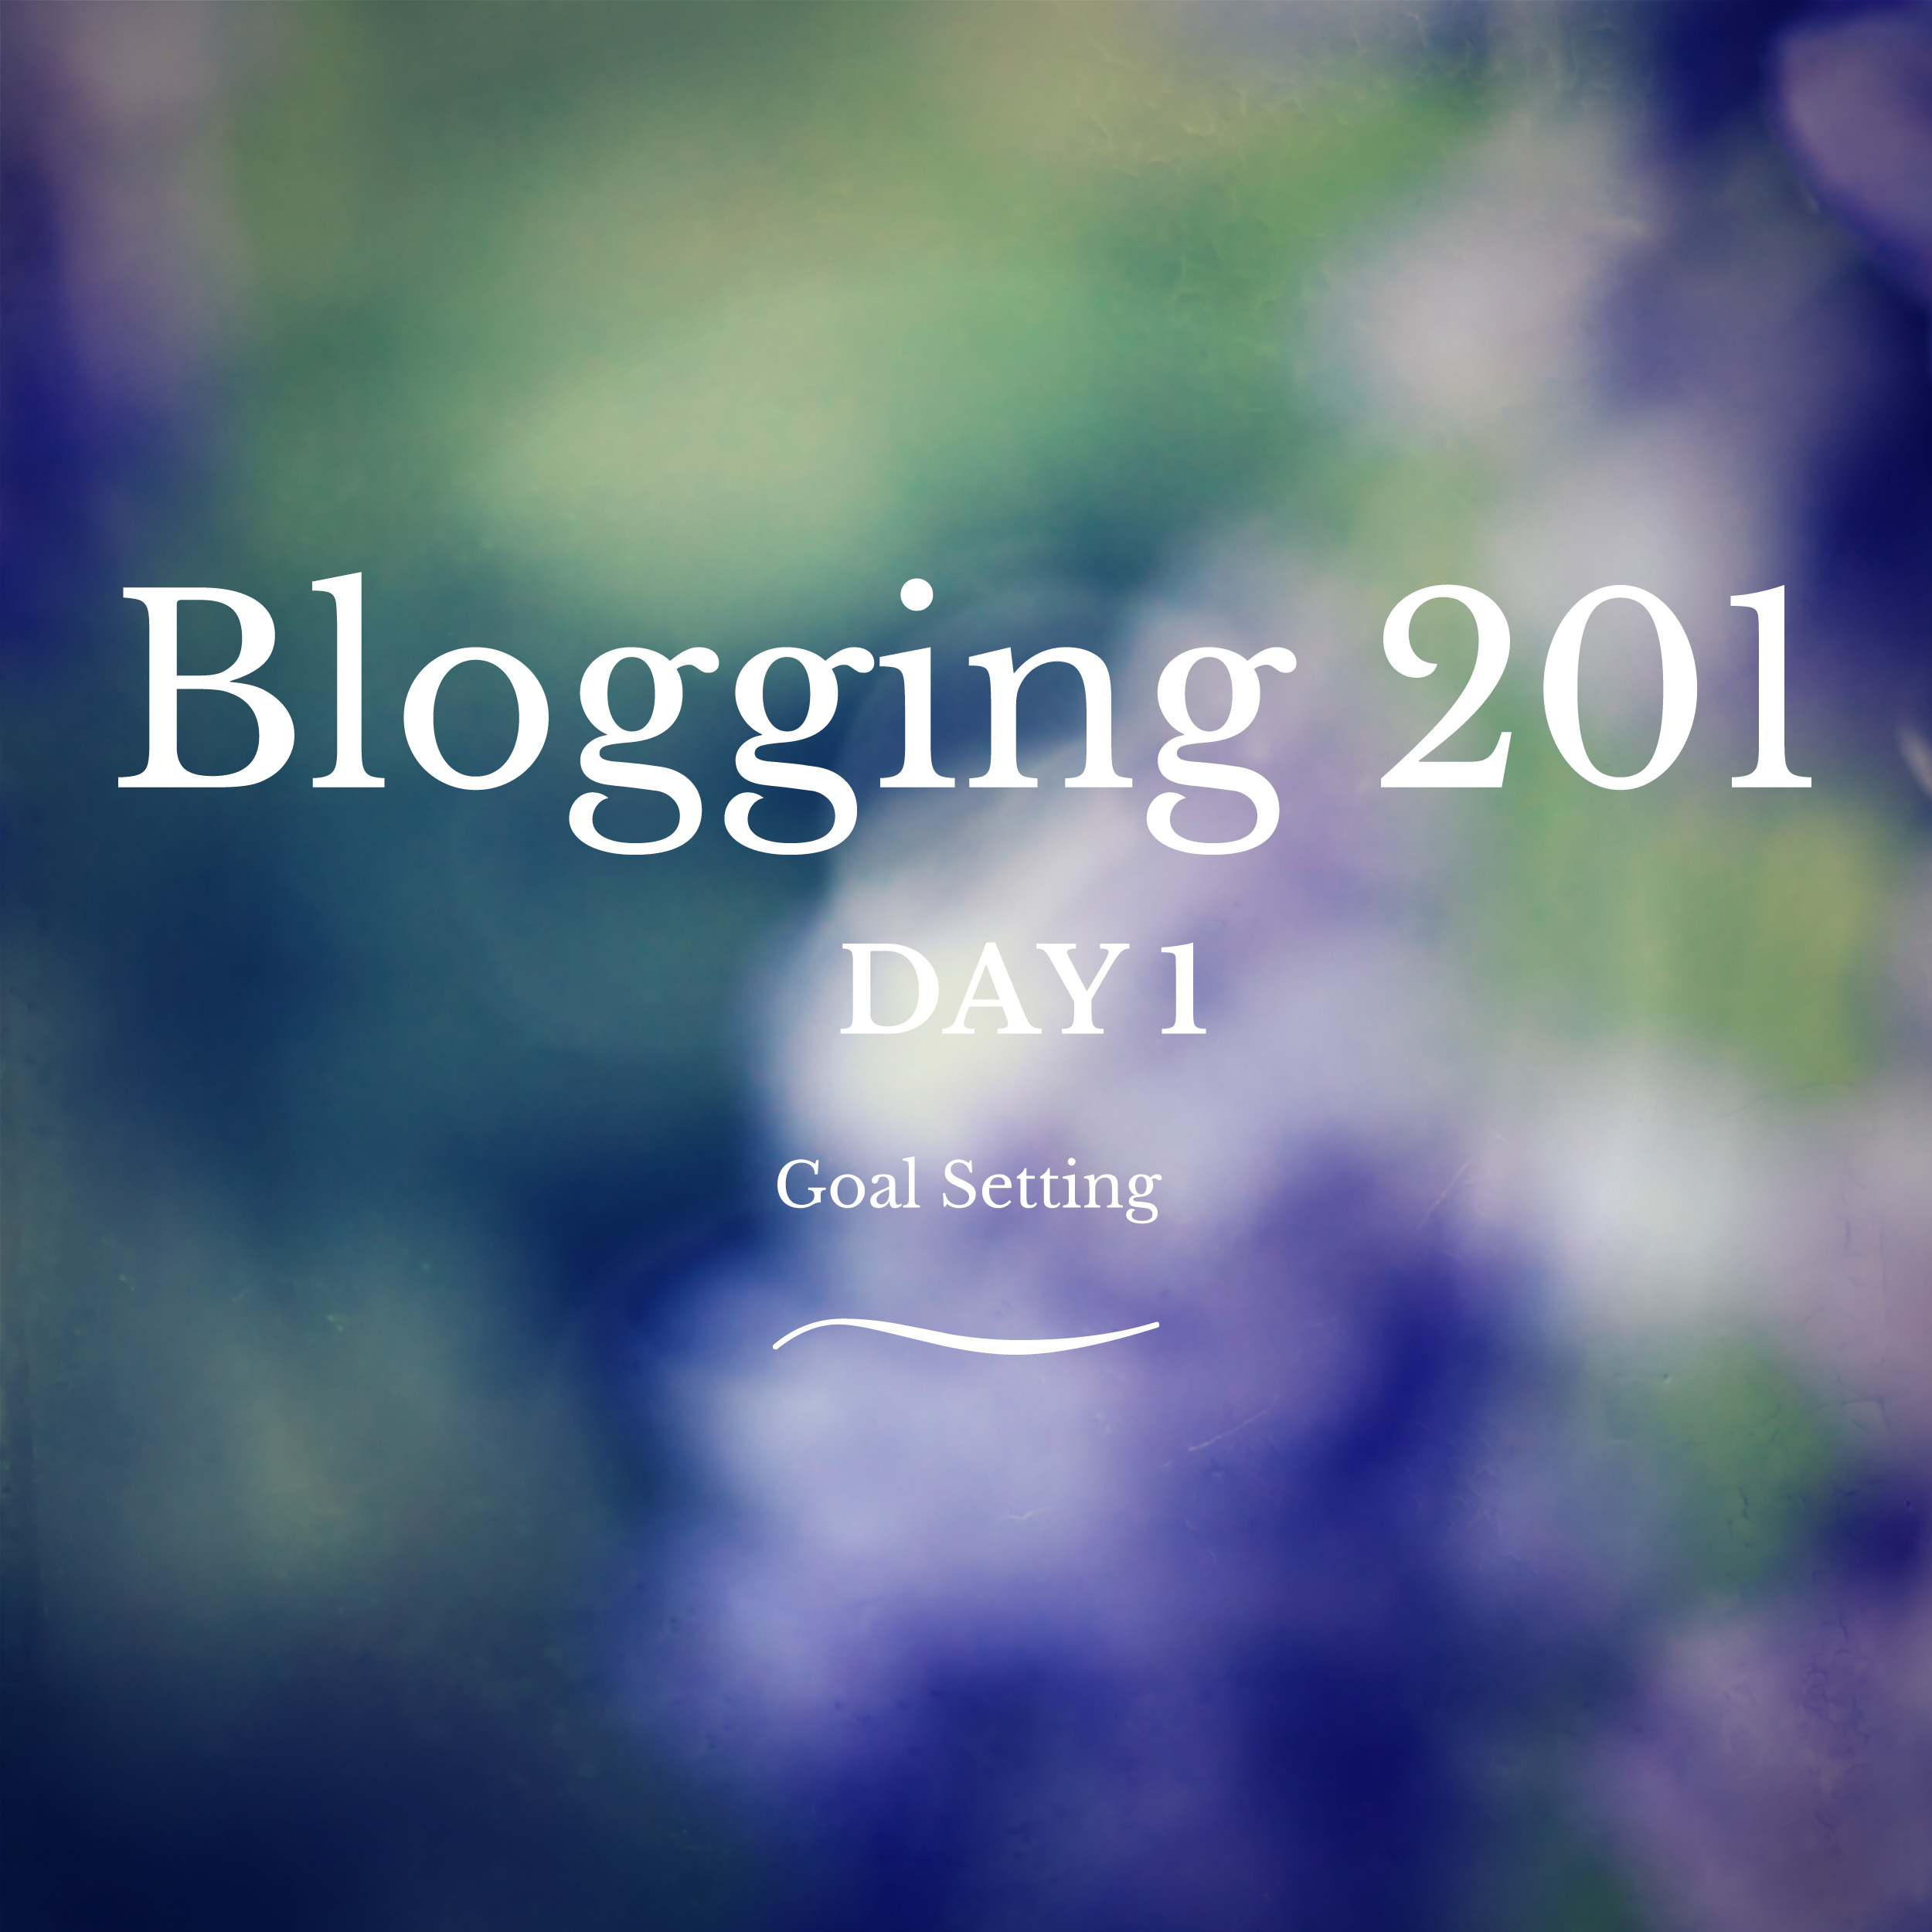 Blogging 201 with WordPress University